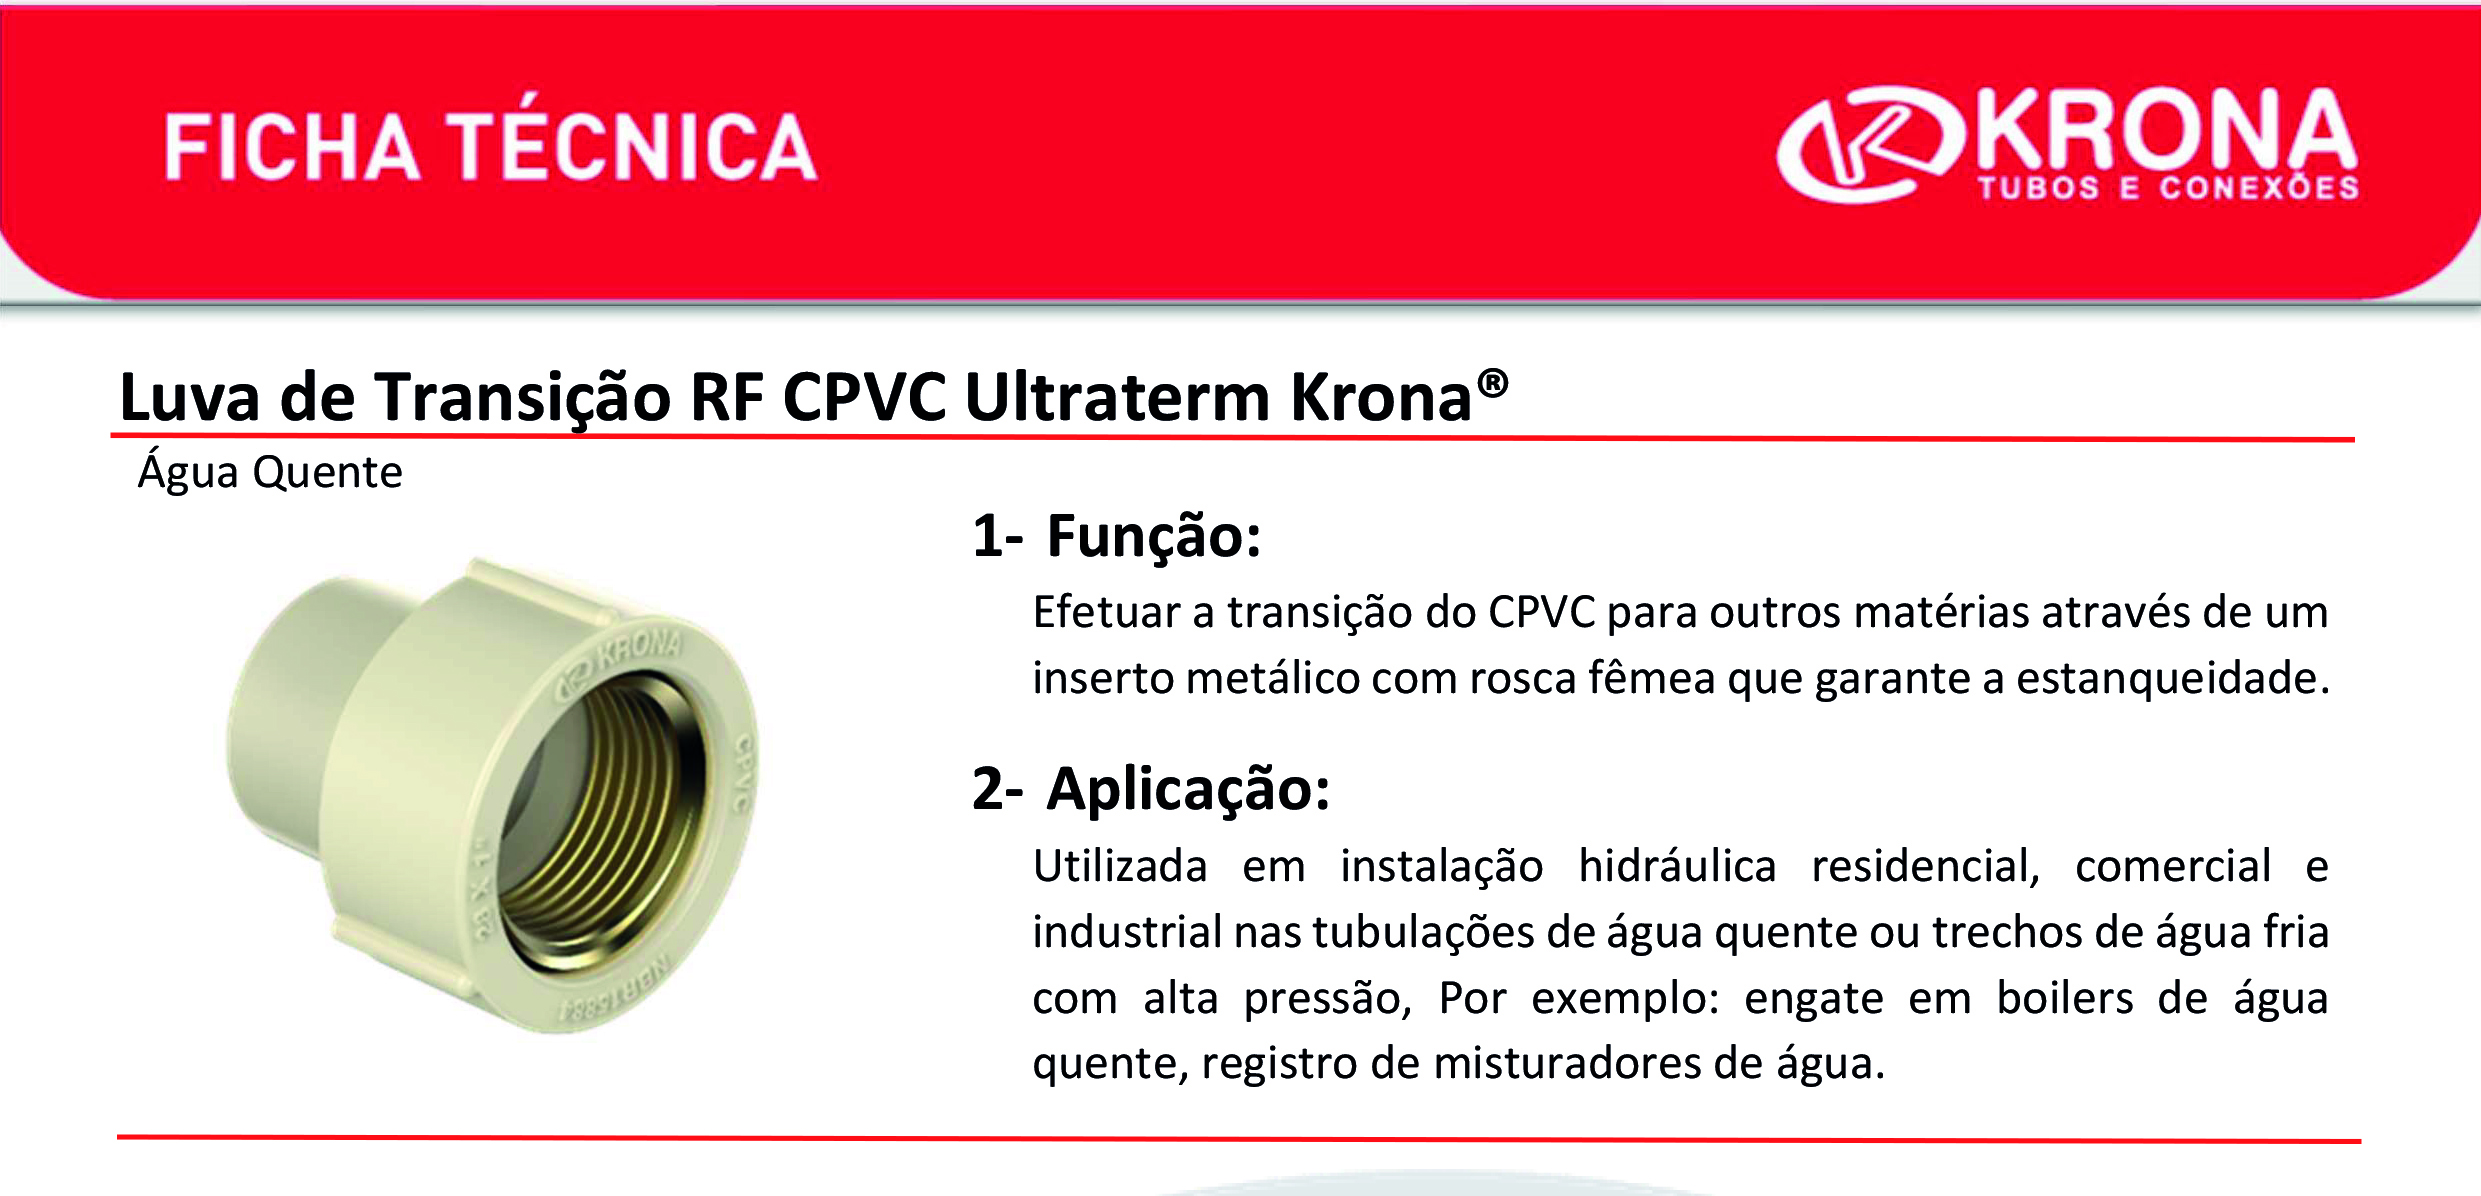 Ficha Técnica – Luva de transição RF CPVC Ultraterm Krona®